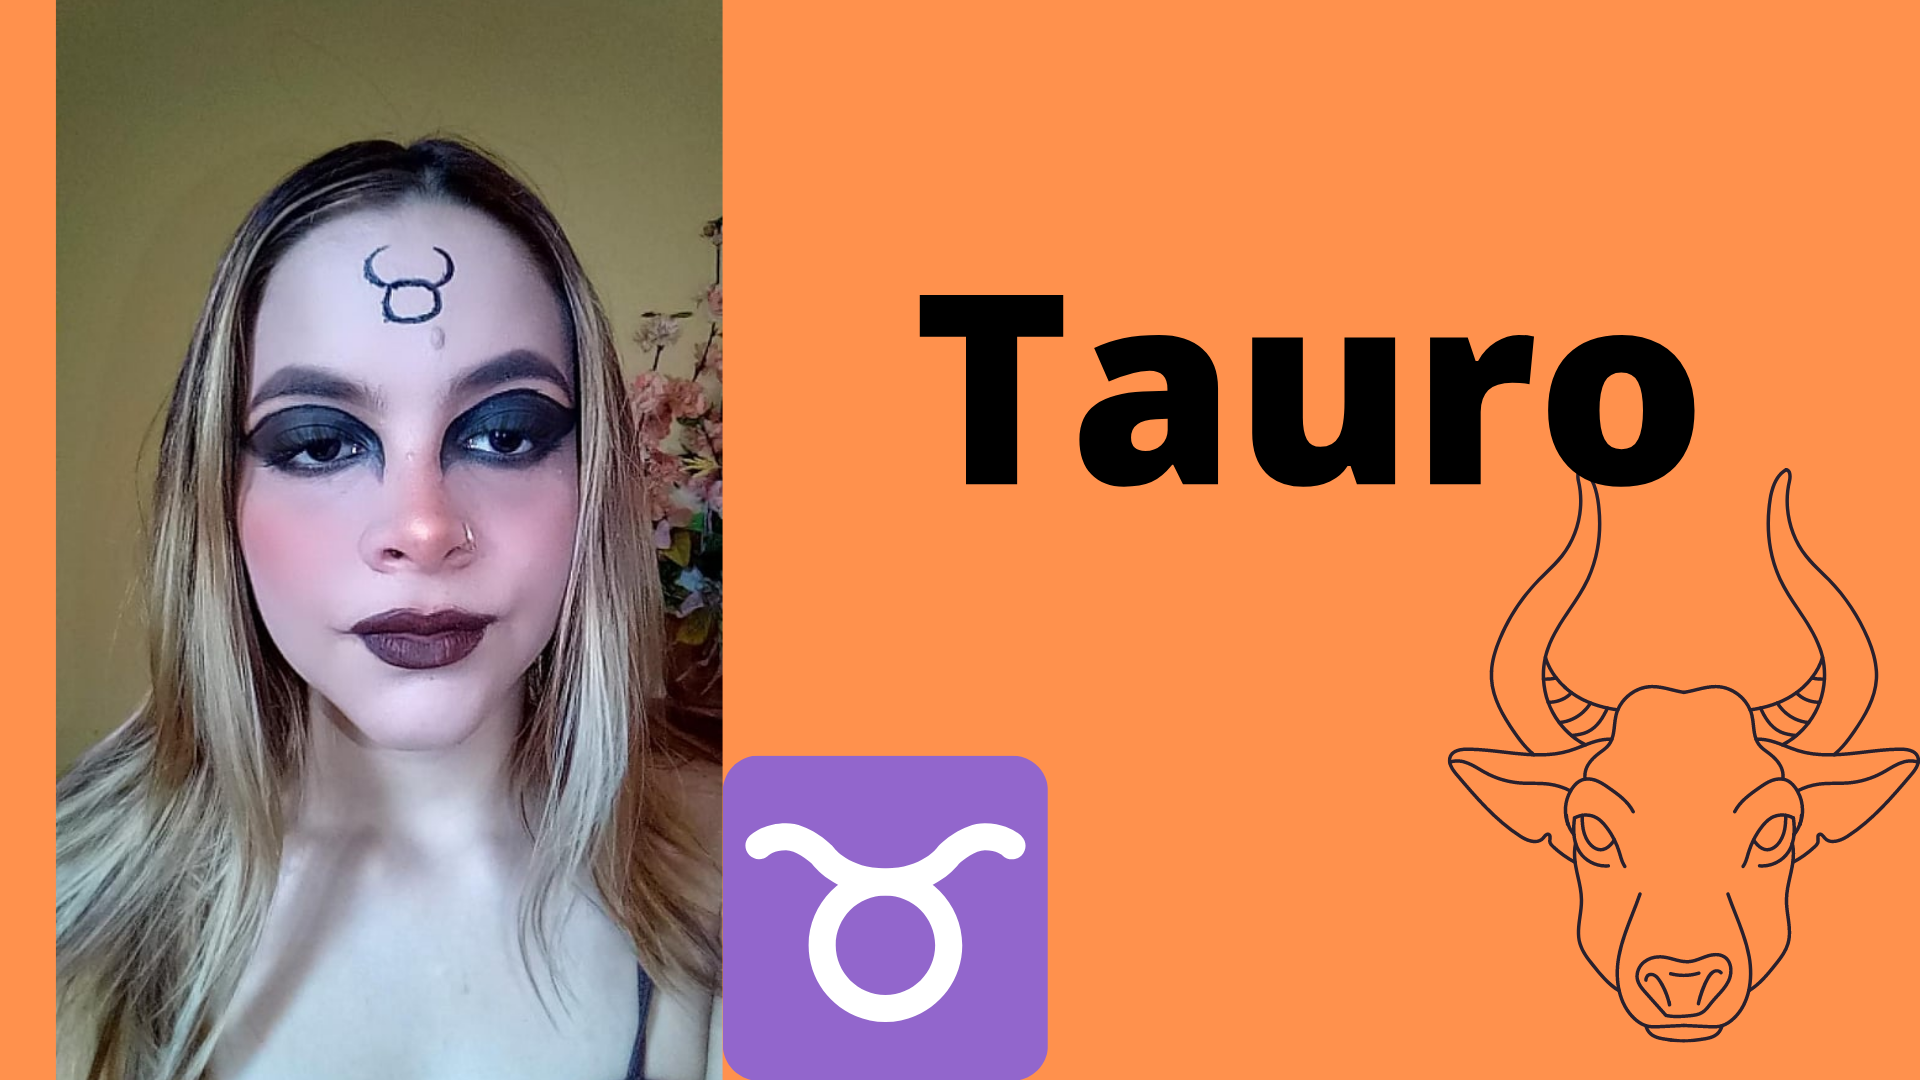 ESP-ENG] Iniciativa: Maquillaje inspirado en los signos del zodiaco- Tauro.  || Initiative: Makeup inspired by the signs of the zodiac - Taurus. | PeakD